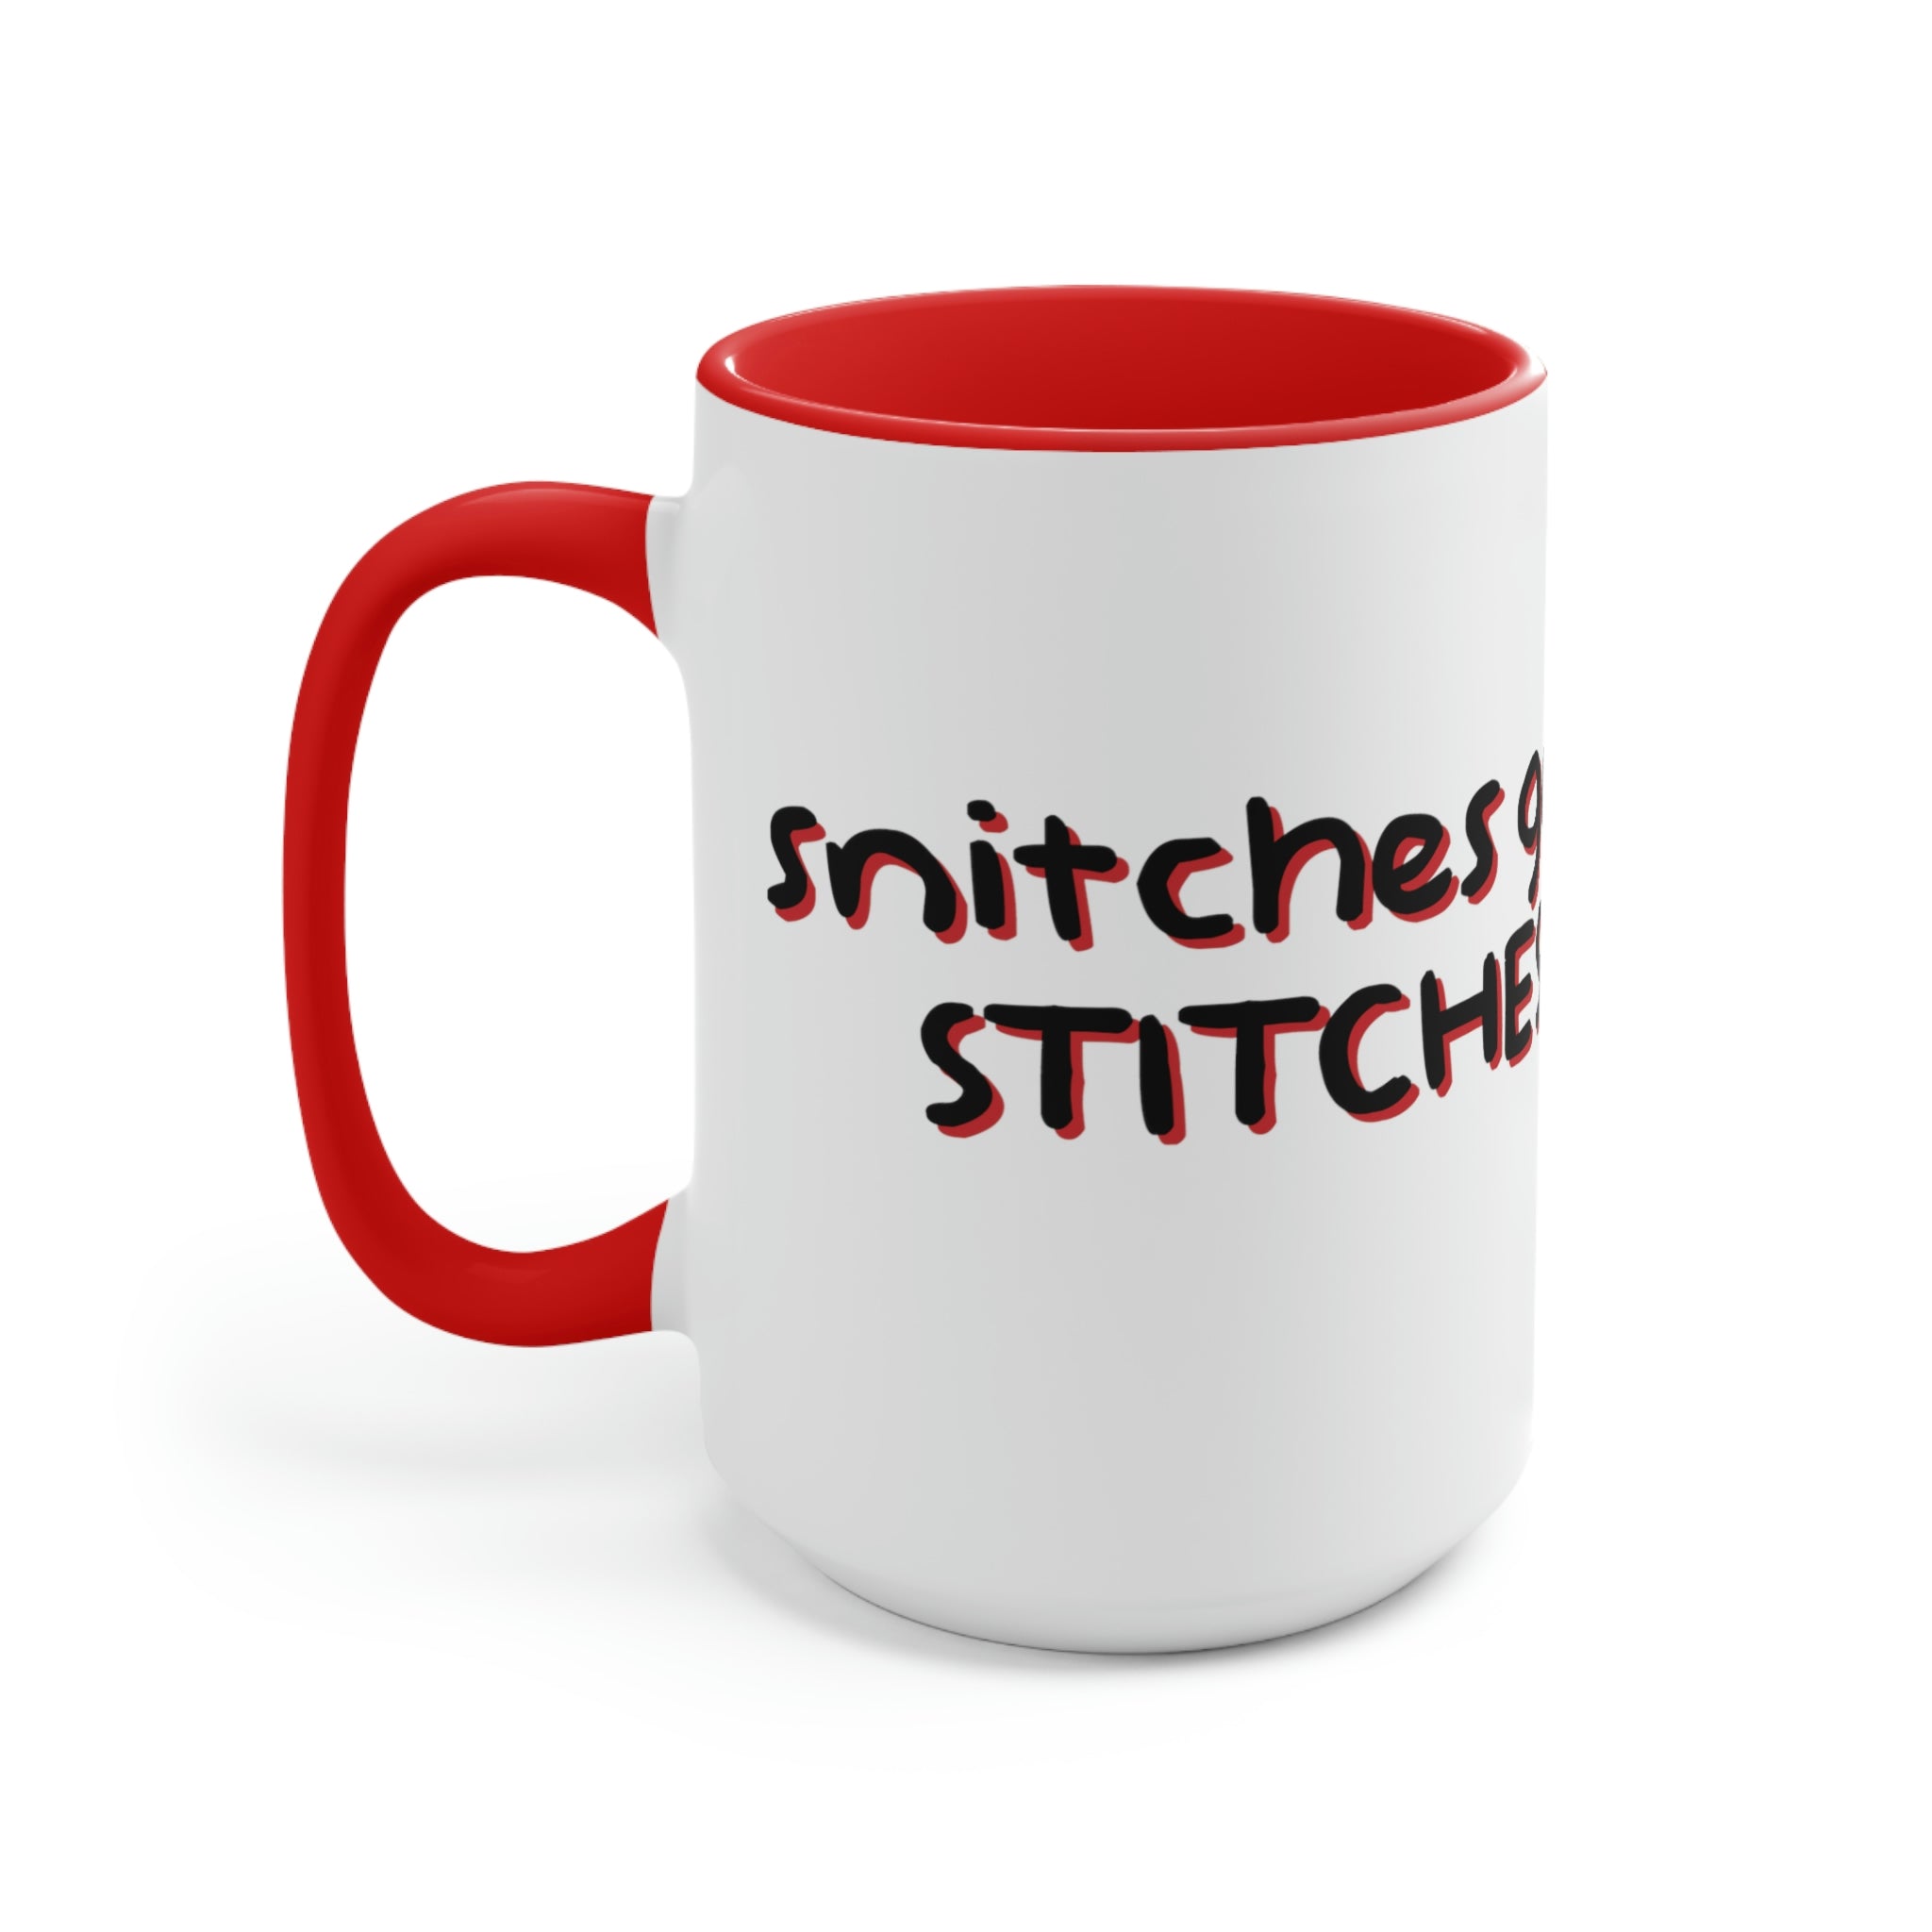 Snitches Get Stiches Mug, 15oz-1